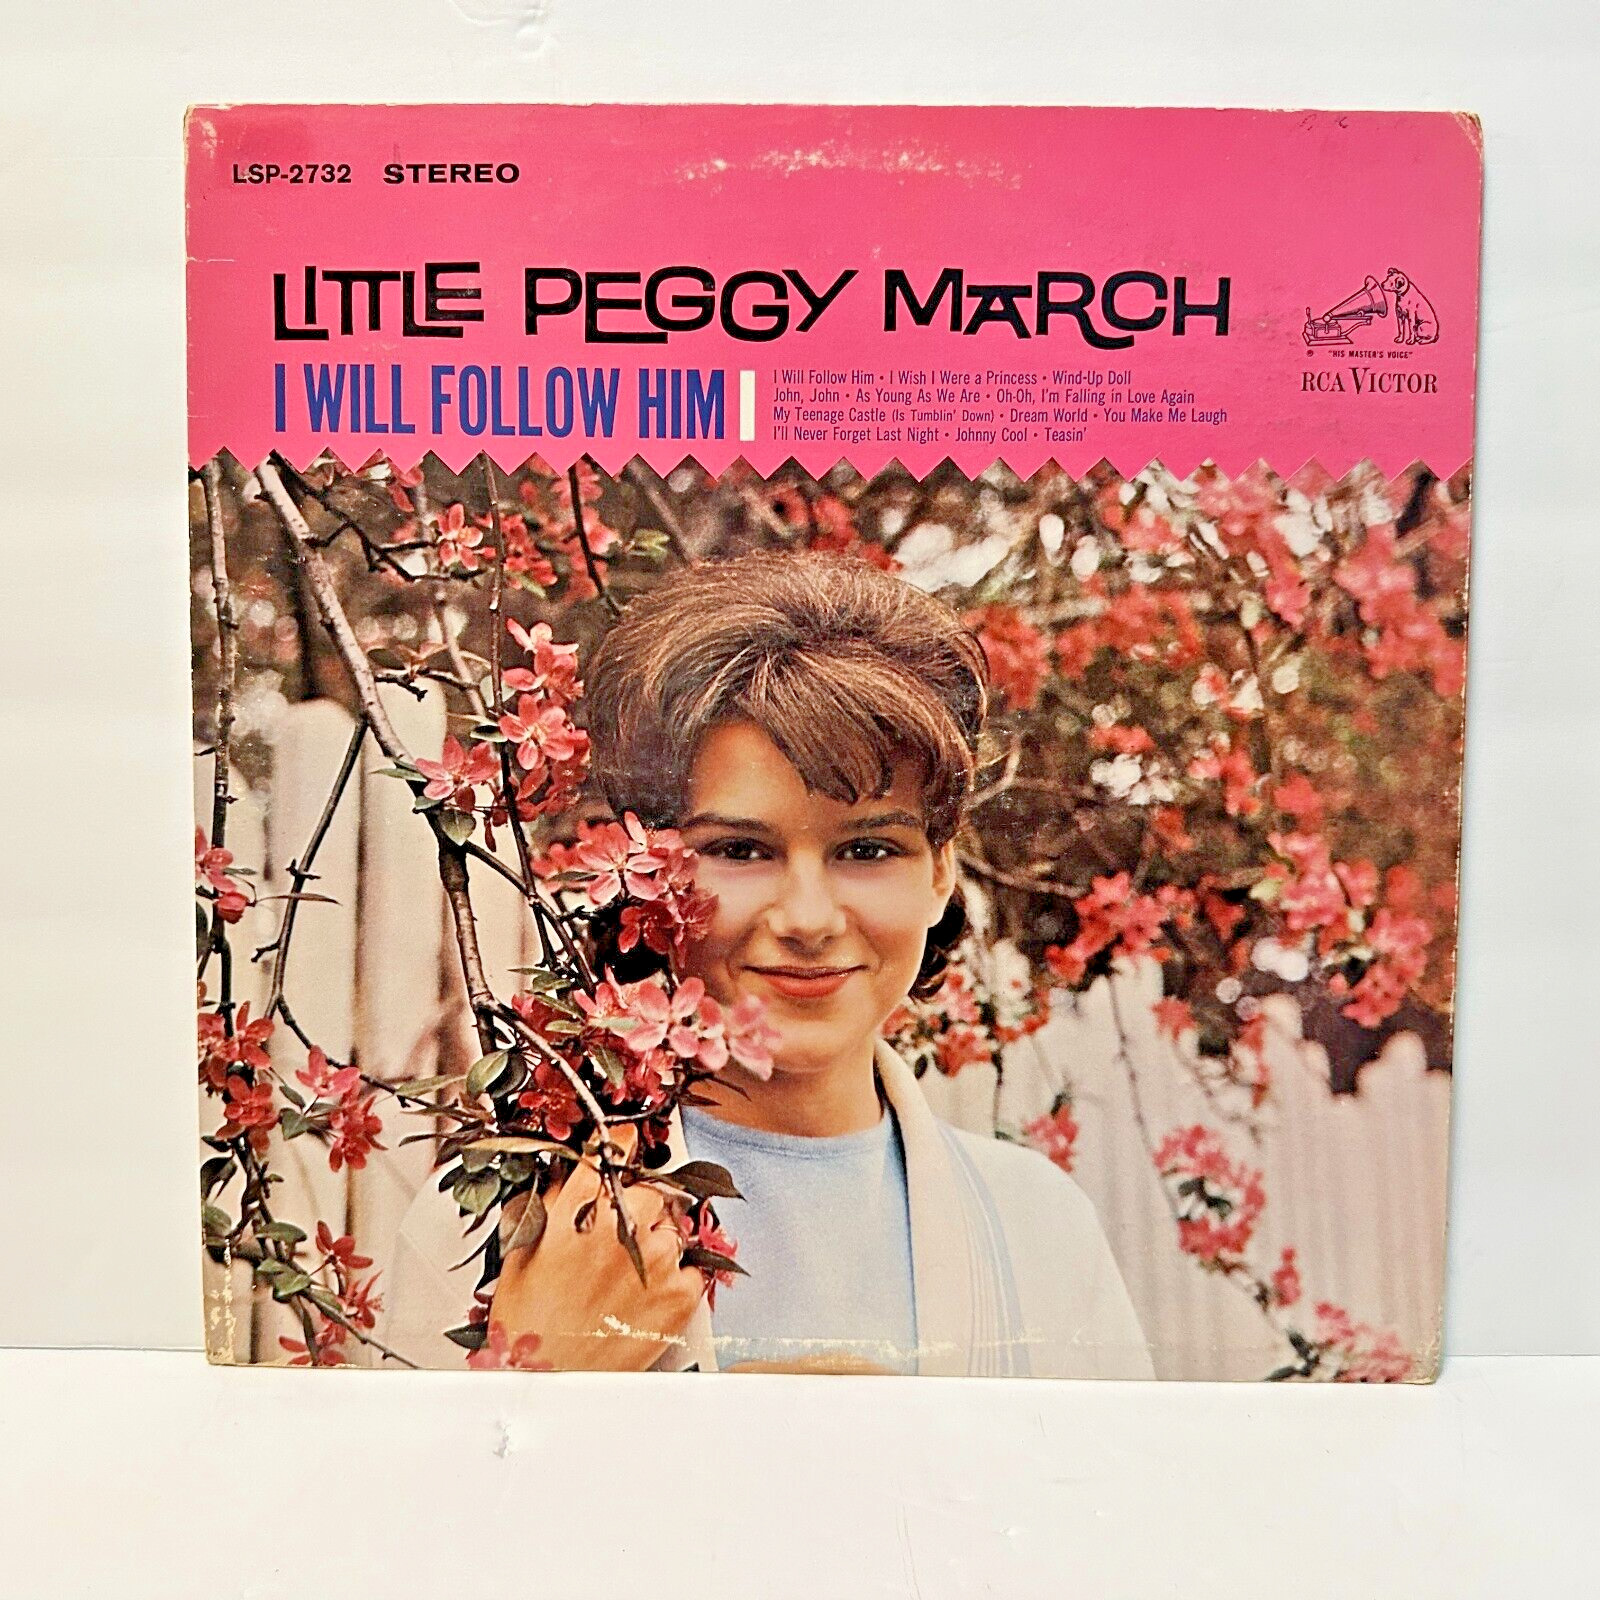 Little Peggy March Vinyl LP I WILL FOLLOW HIM 1963 (S) VG+/VG+